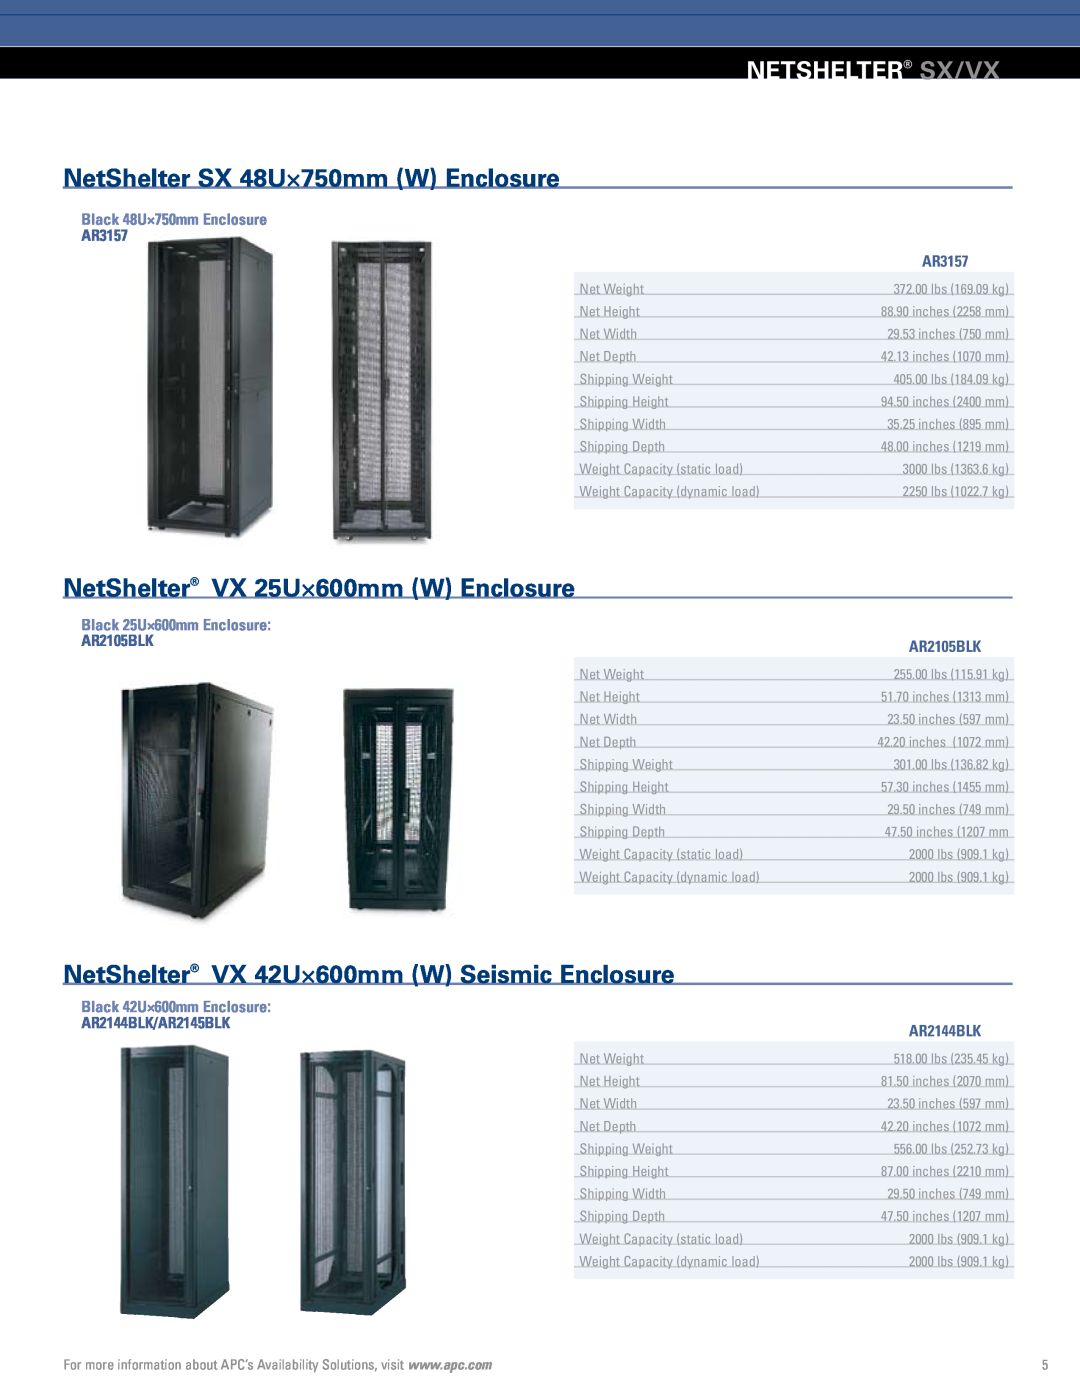 APC Rack Systems manual netshelter SX/VX, NetShelter SX 48U×750mm W Enclosure, NetShelter VX 25U×600mm W Enclosure, AR3157 